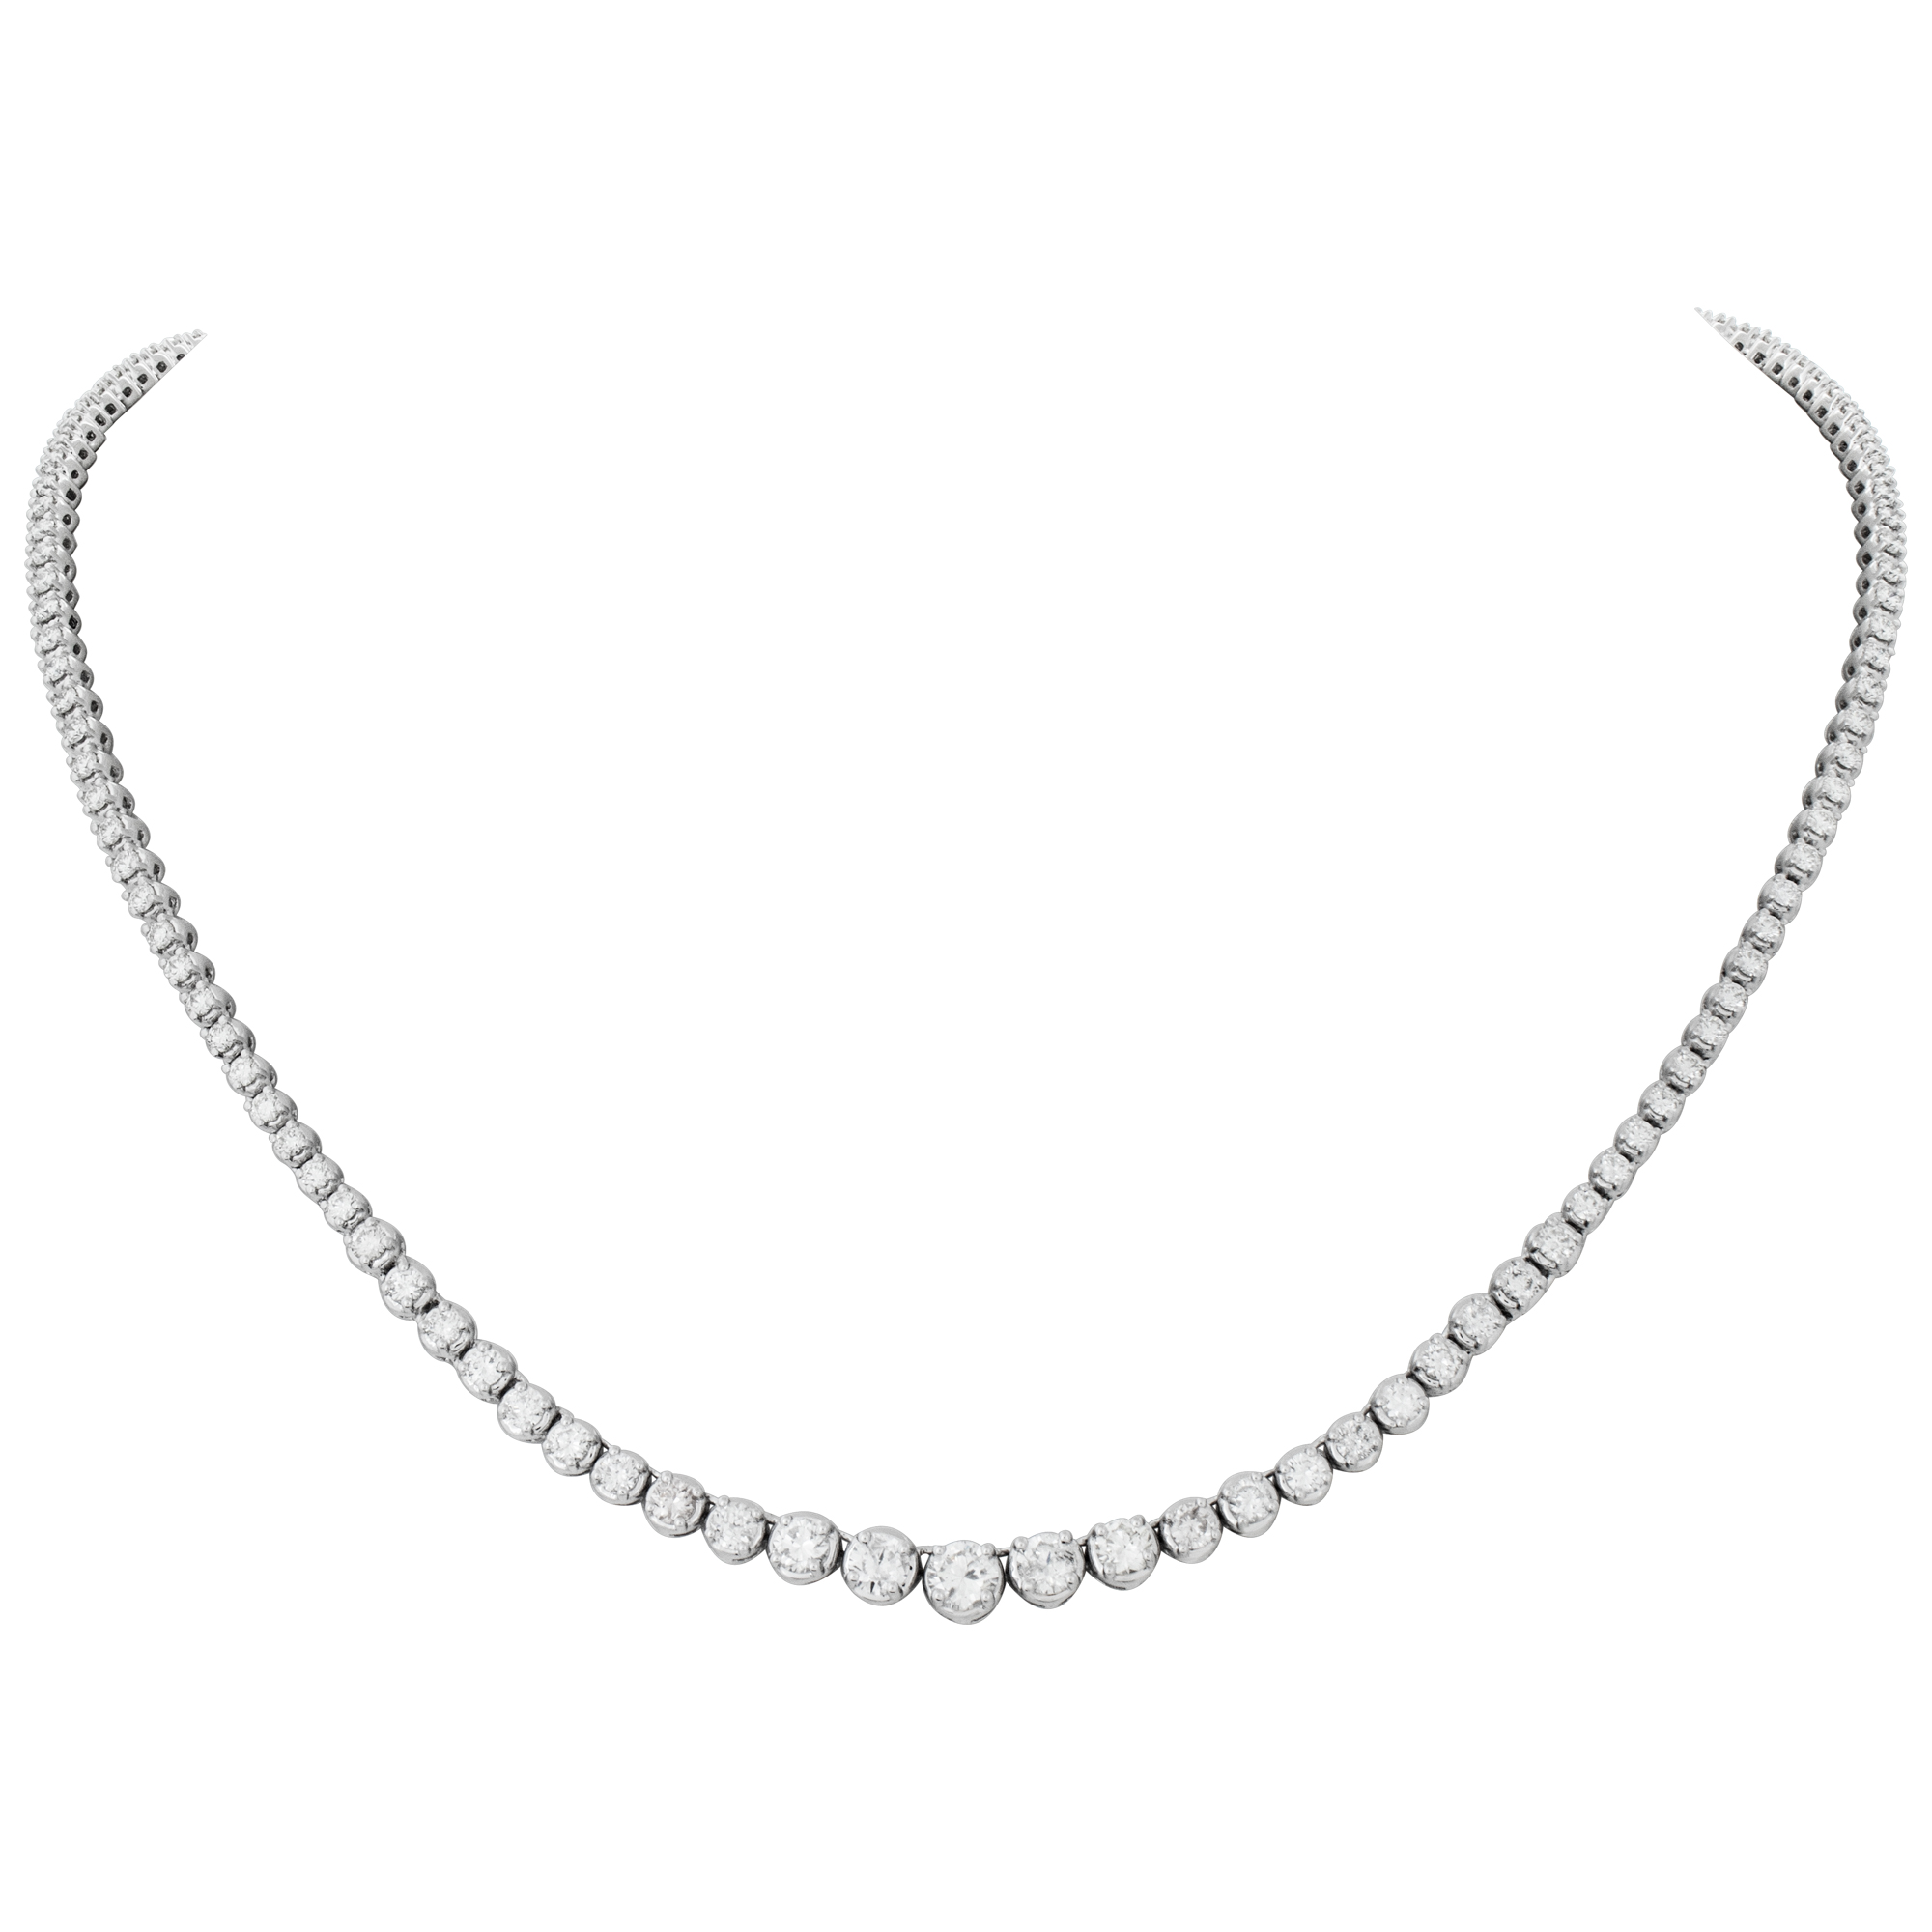 Graduated diamonds line necklace in 18k white gold